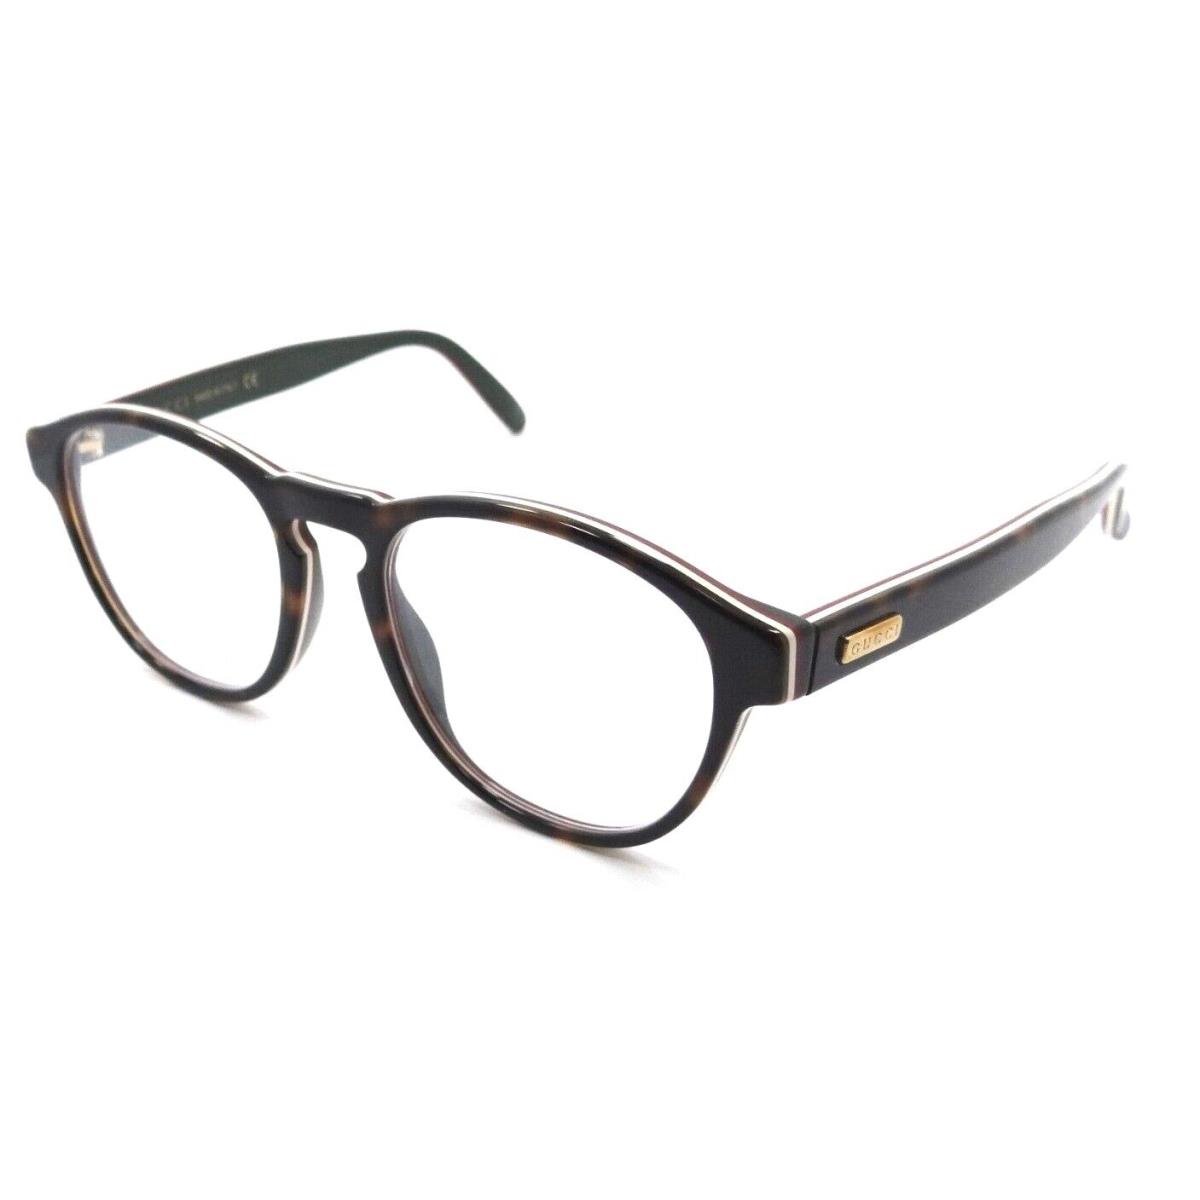 Gucci Eyeglasses Frames GG0273O 002 50-18-145 Havana Made in Italy